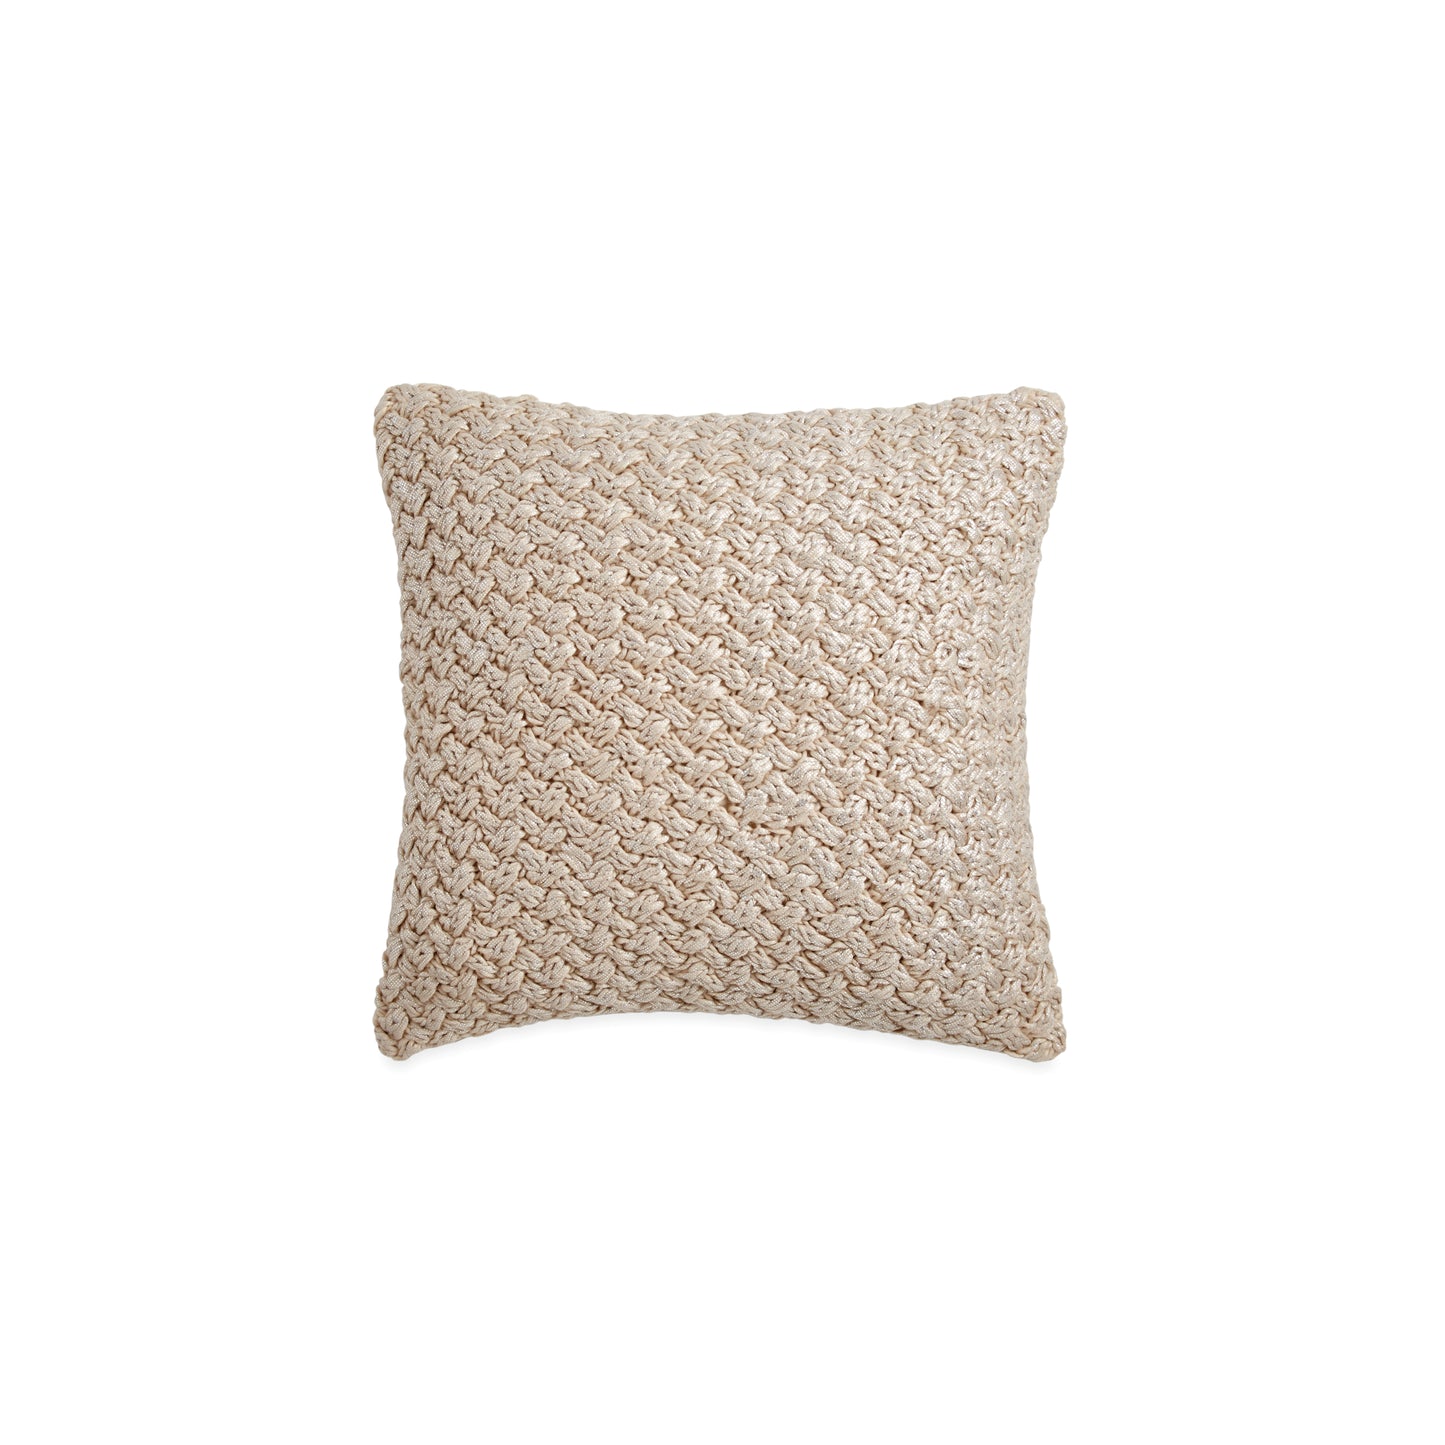 Michael Aram Metallic Knit Decorative Pillow